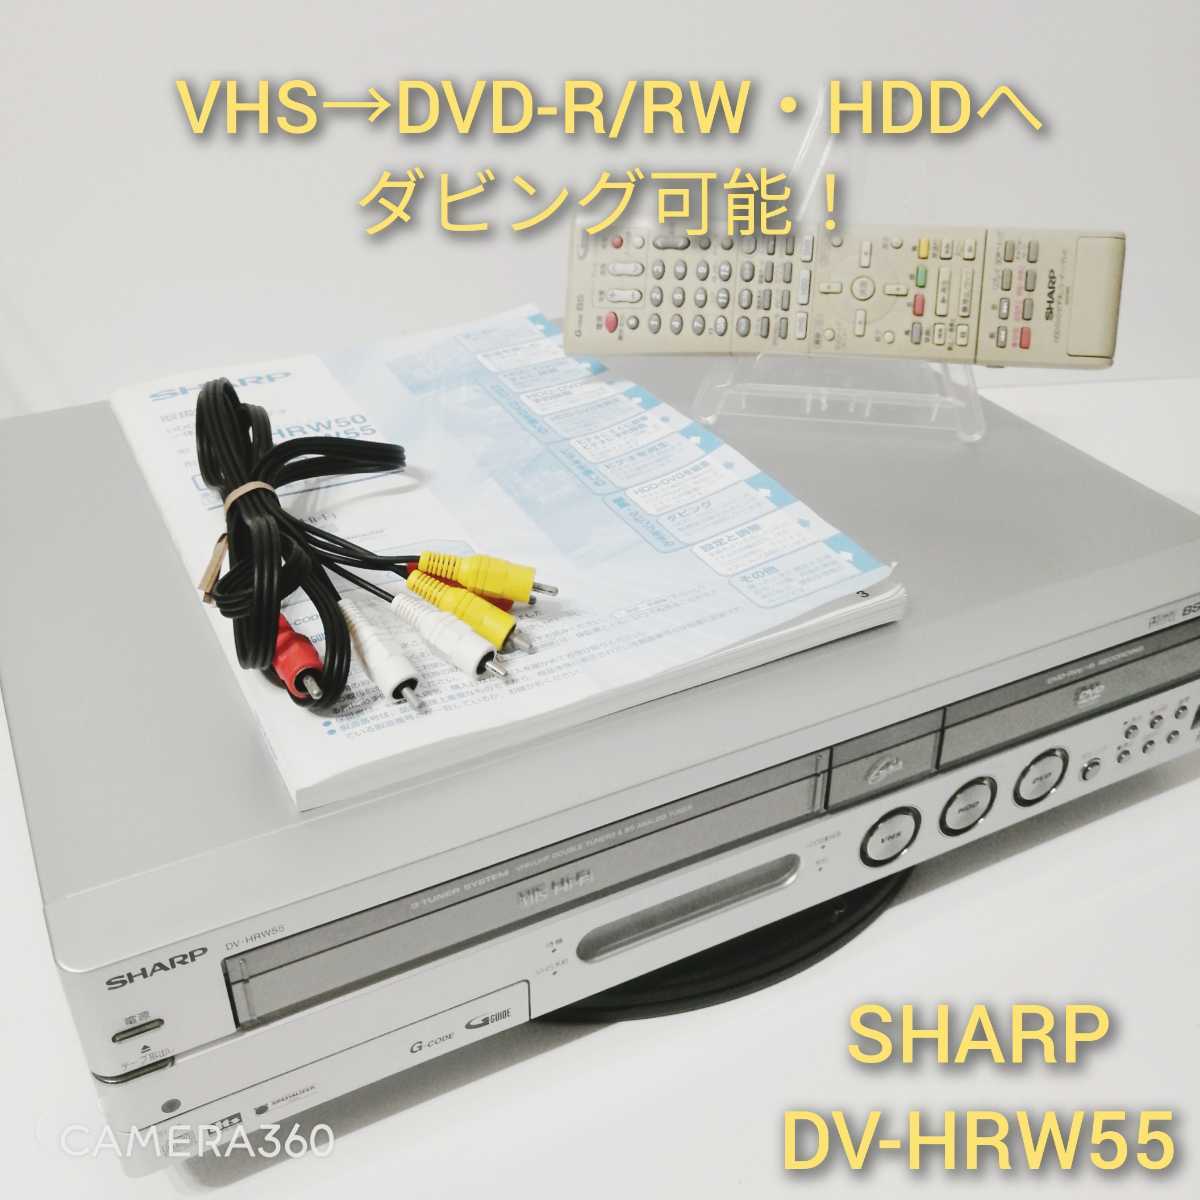 VHS→DVD-R/RW・HDDへダビング可能★リモコン・説明書・3色ケーブル付き！★SHARP DV-HRW55 VHS HDD DVDレコーダー